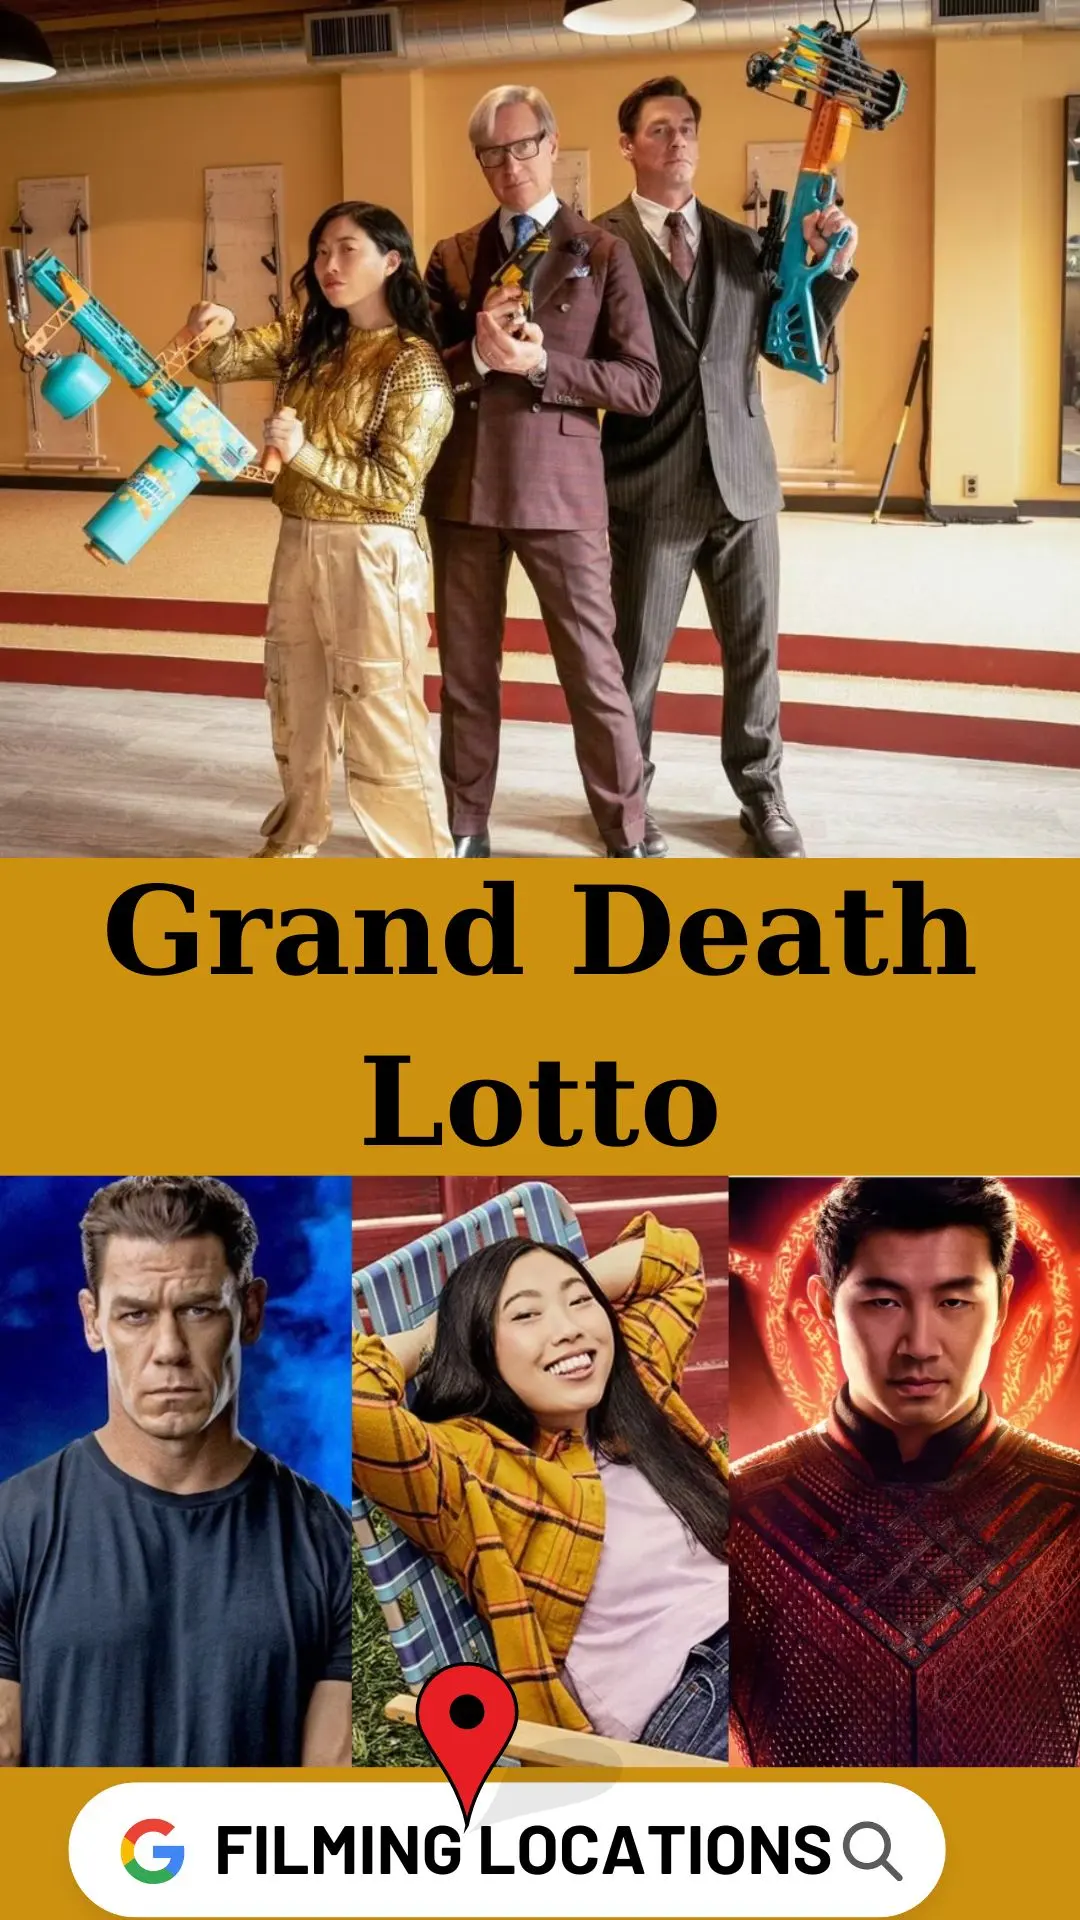 Grand Death Lotto Filming Locations